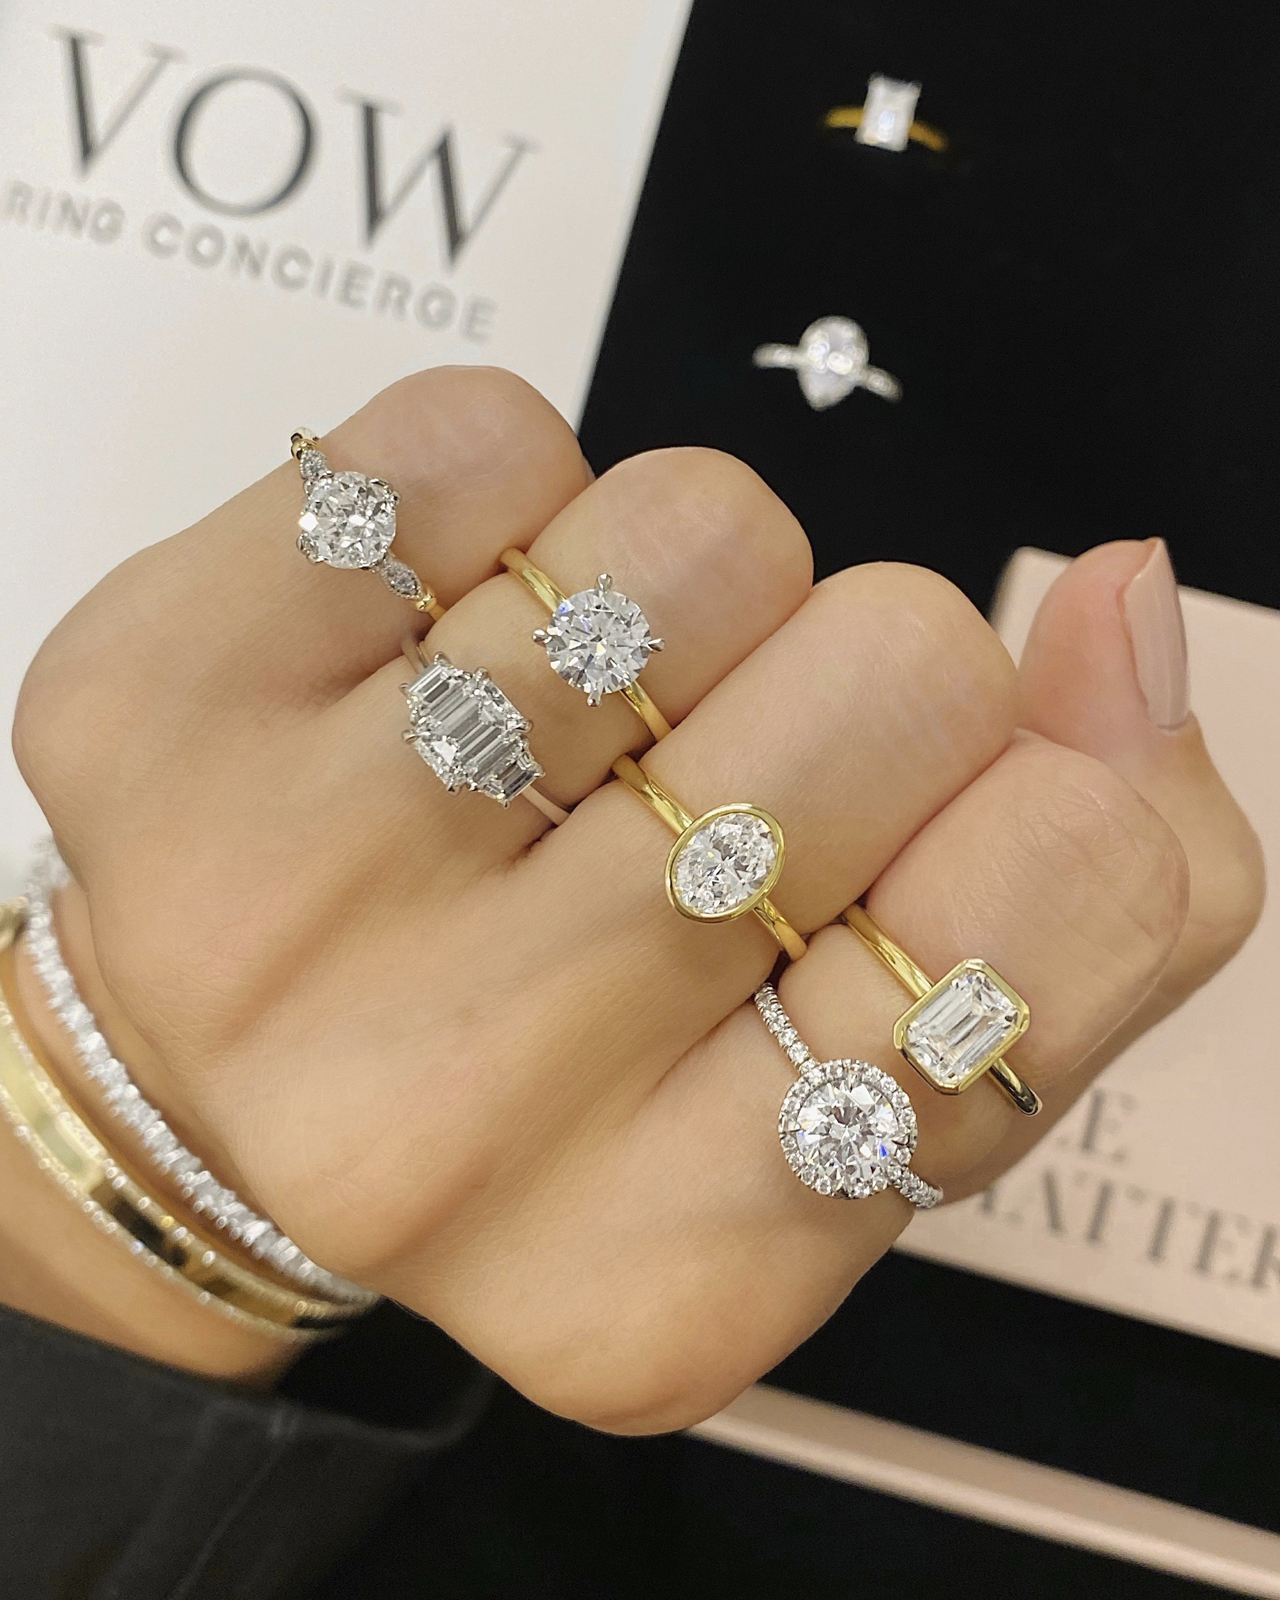 Ring Concierge 6 diamond engagement rings
